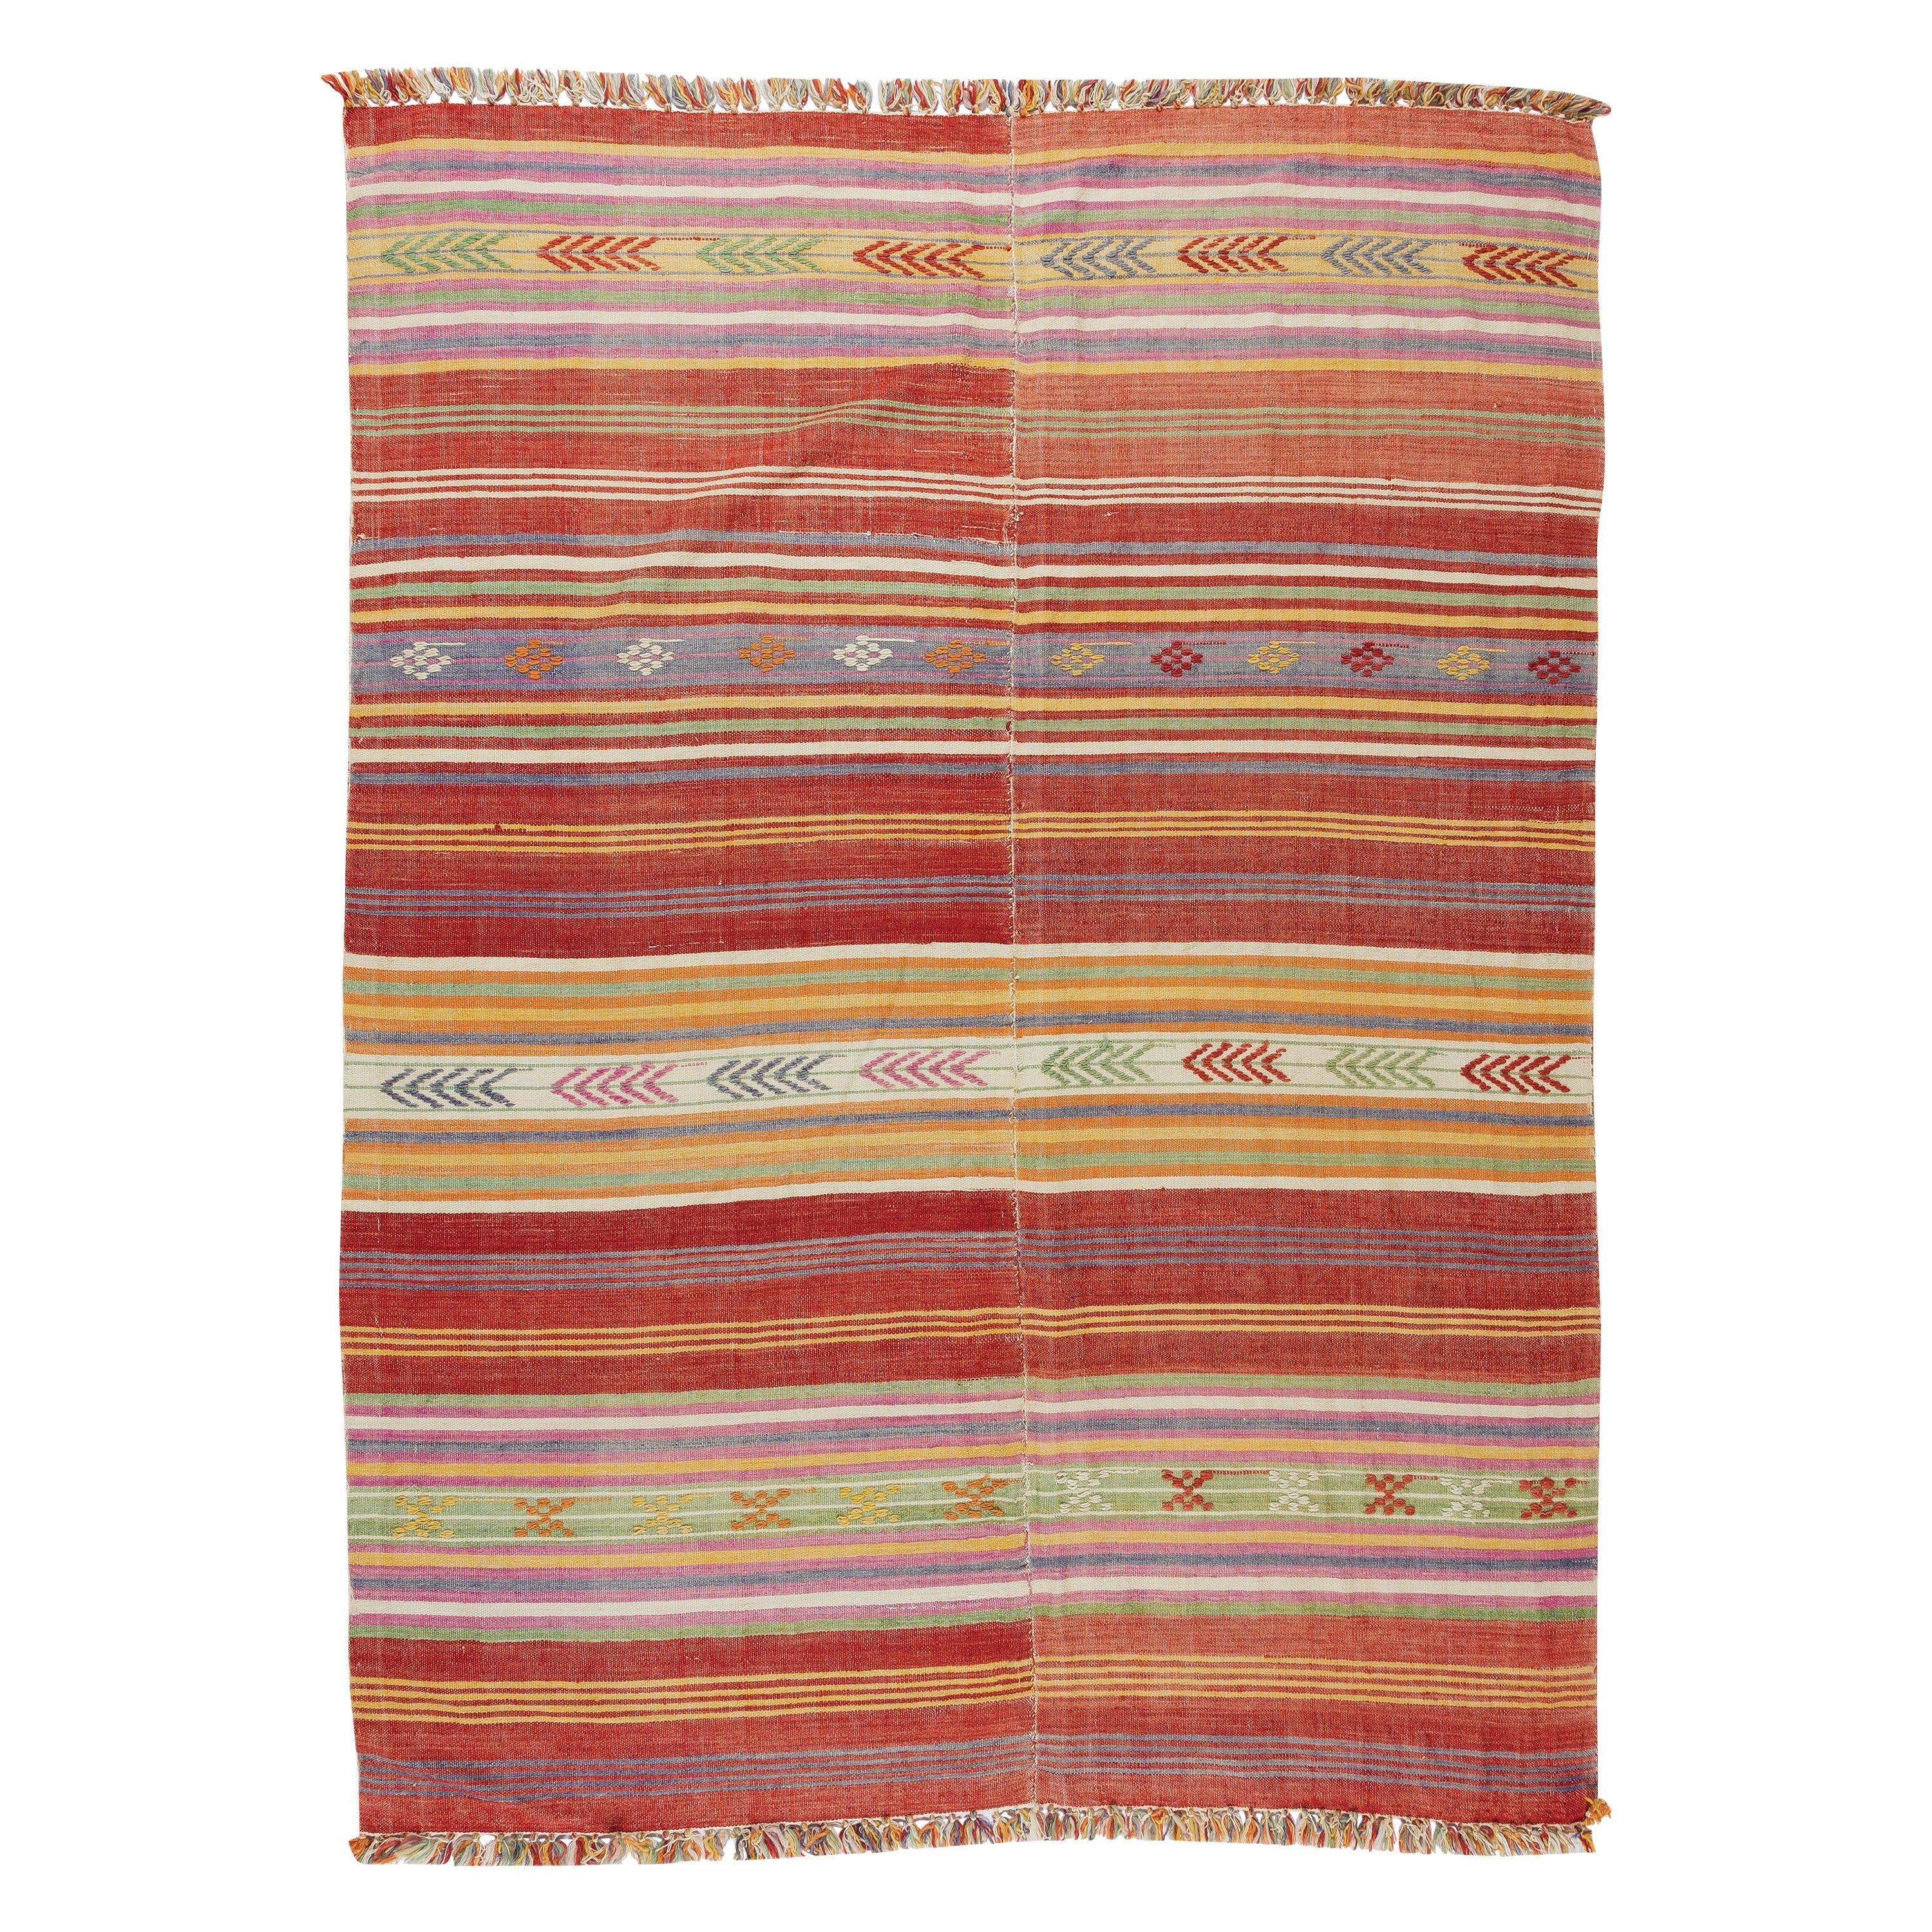 5.8x7.8 Ft Handmade Vintage Anatolian Striped Kilim Rug, 100% Wool, Reversible For Sale